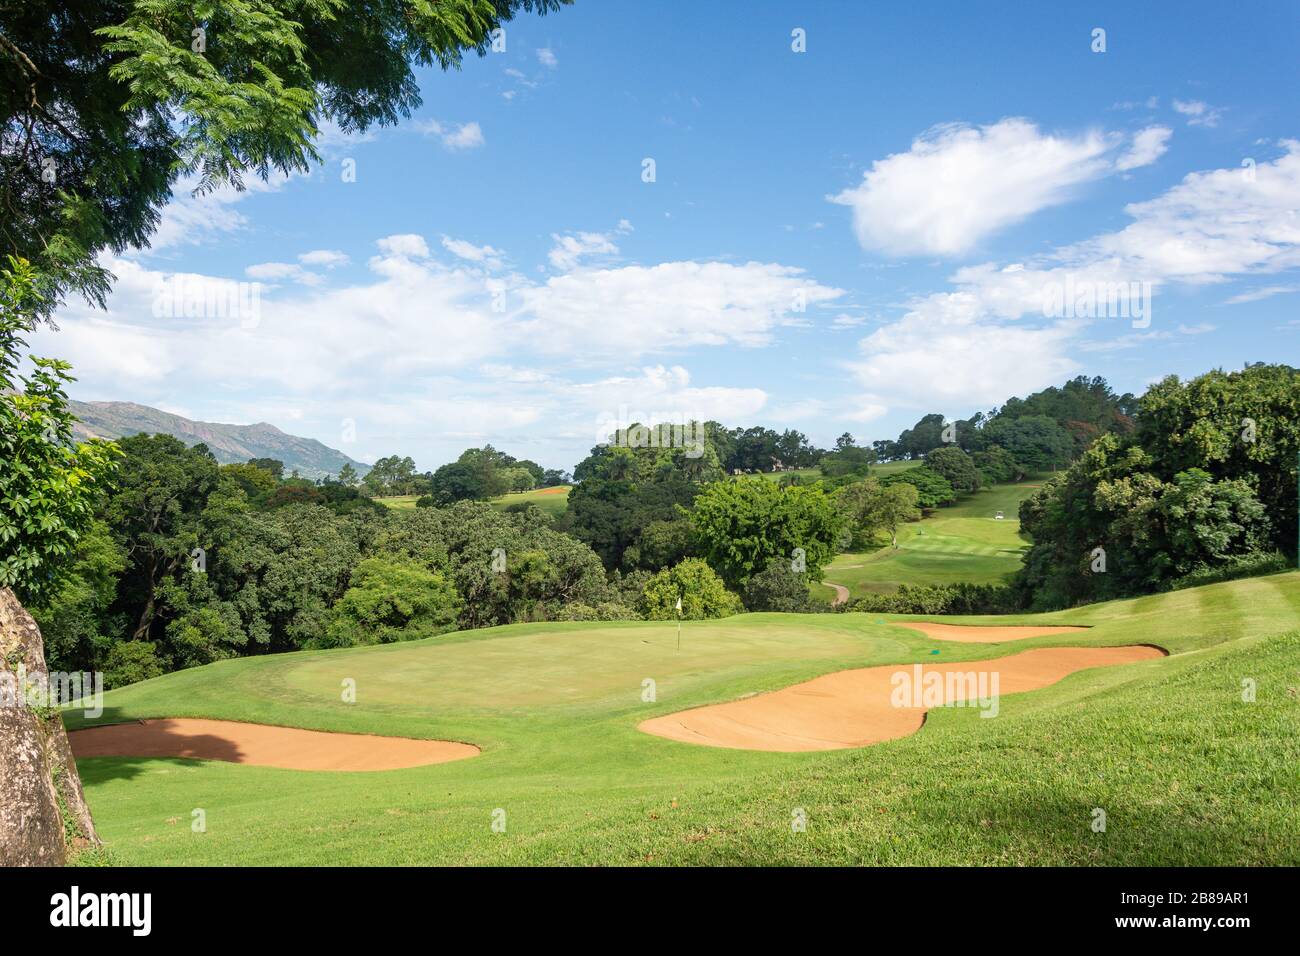 Royal Swaziland Golf Club, Royal Swaziland Spa Hotel & Casino, Lobamba, Ezulwini Valley, Royaume d'Eswatini (Swaziland) Banque D'Images